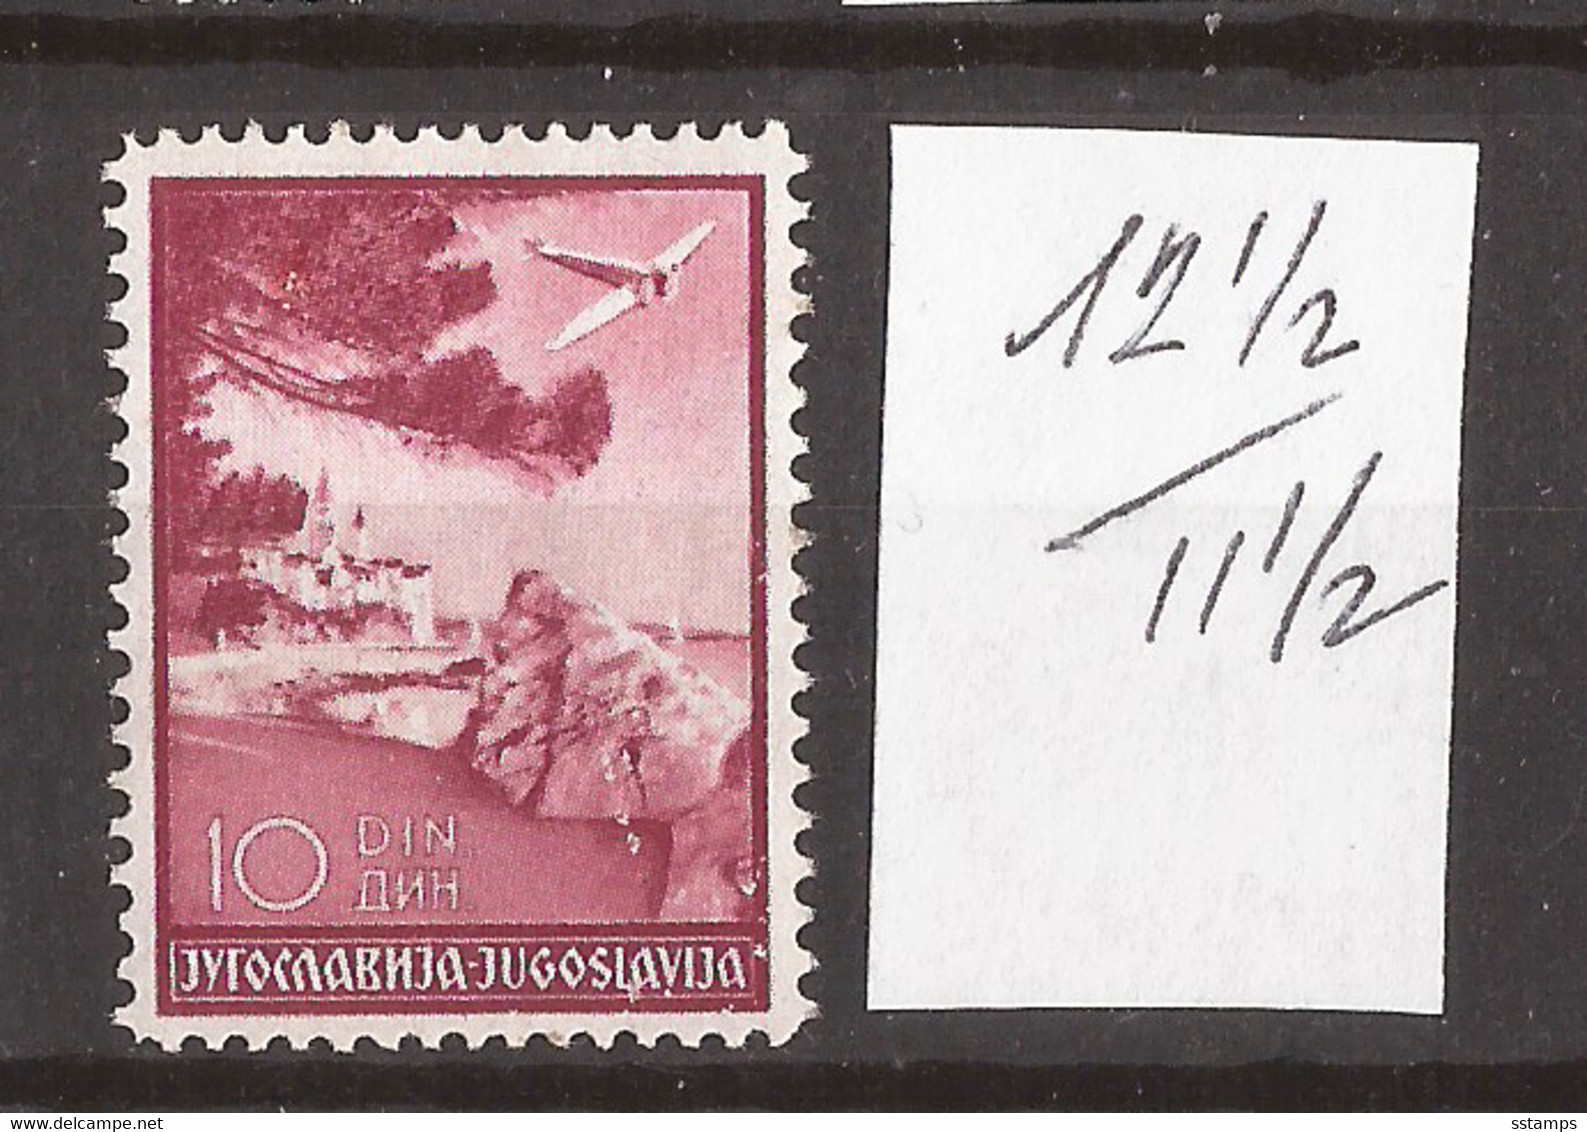 YU-KR 5  1937 CROAZIA KIRCHE    AUSVERKAUF BILLIG GUTE QUALITET  RAB INSEL JUGOSLAVIJA JUGOSLAWIEN MNH - Unused Stamps